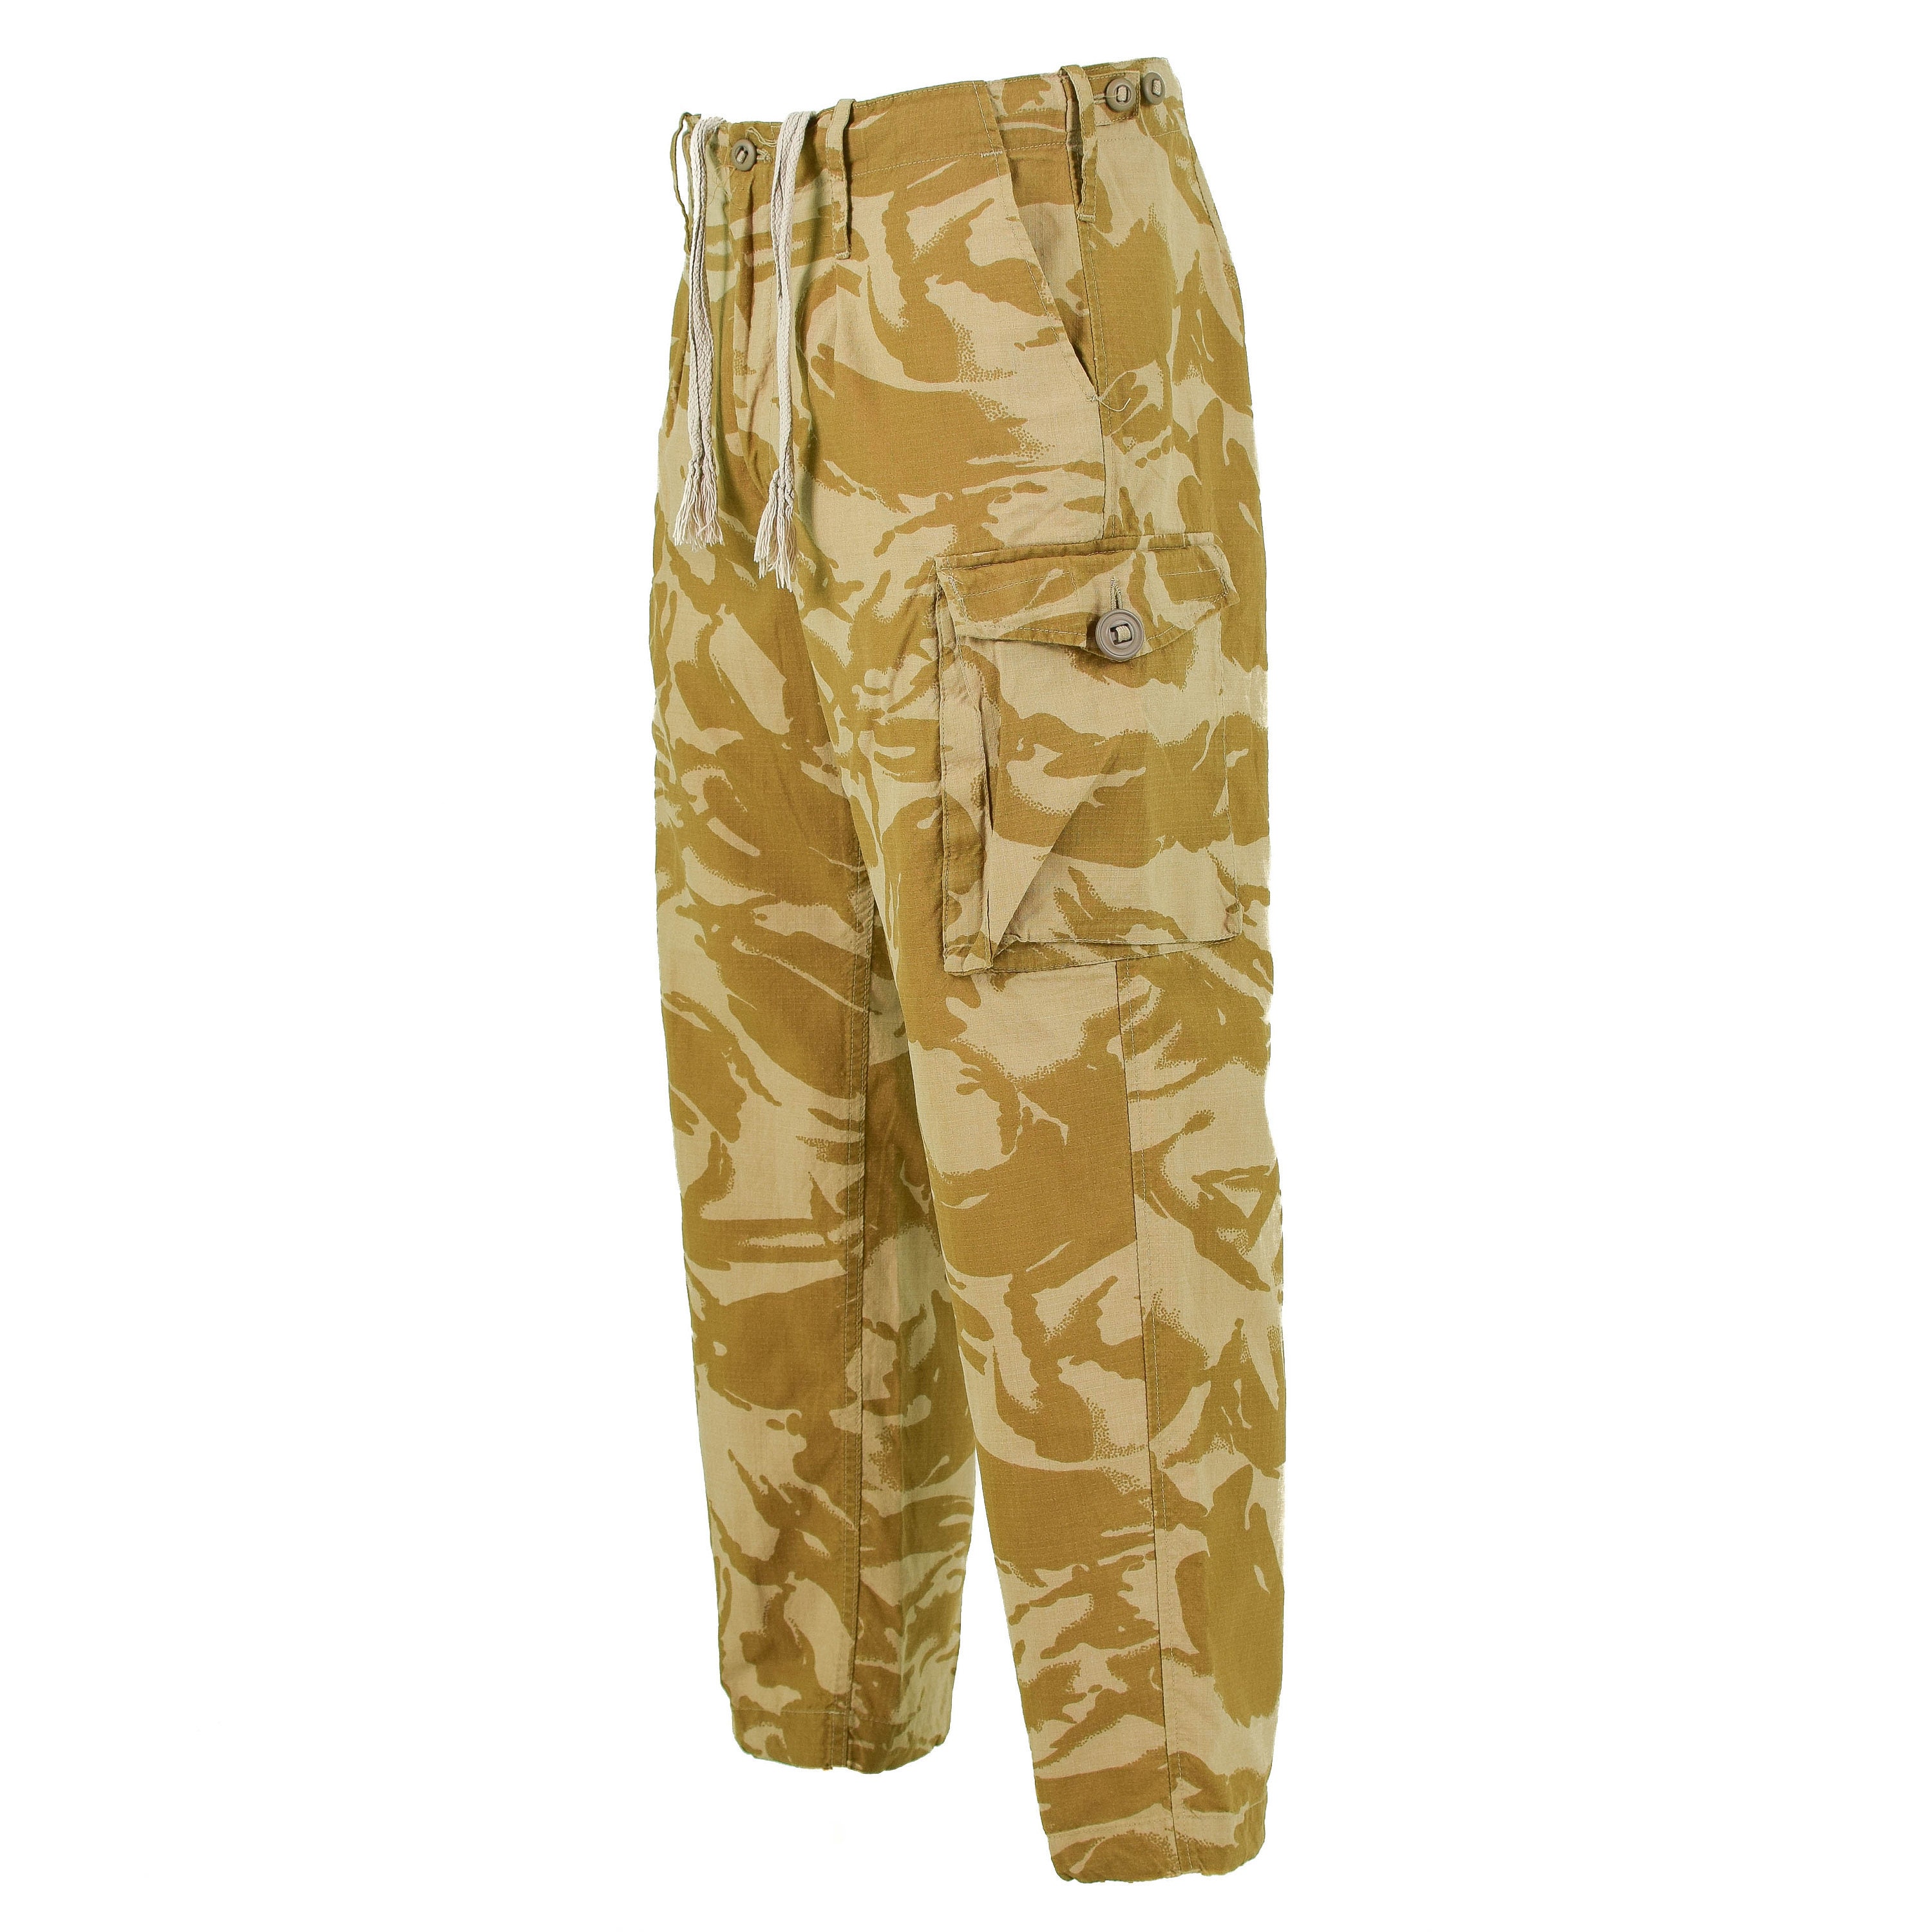 Genuine British Army Surplus Desert PLCE combat trousers webbing working belt